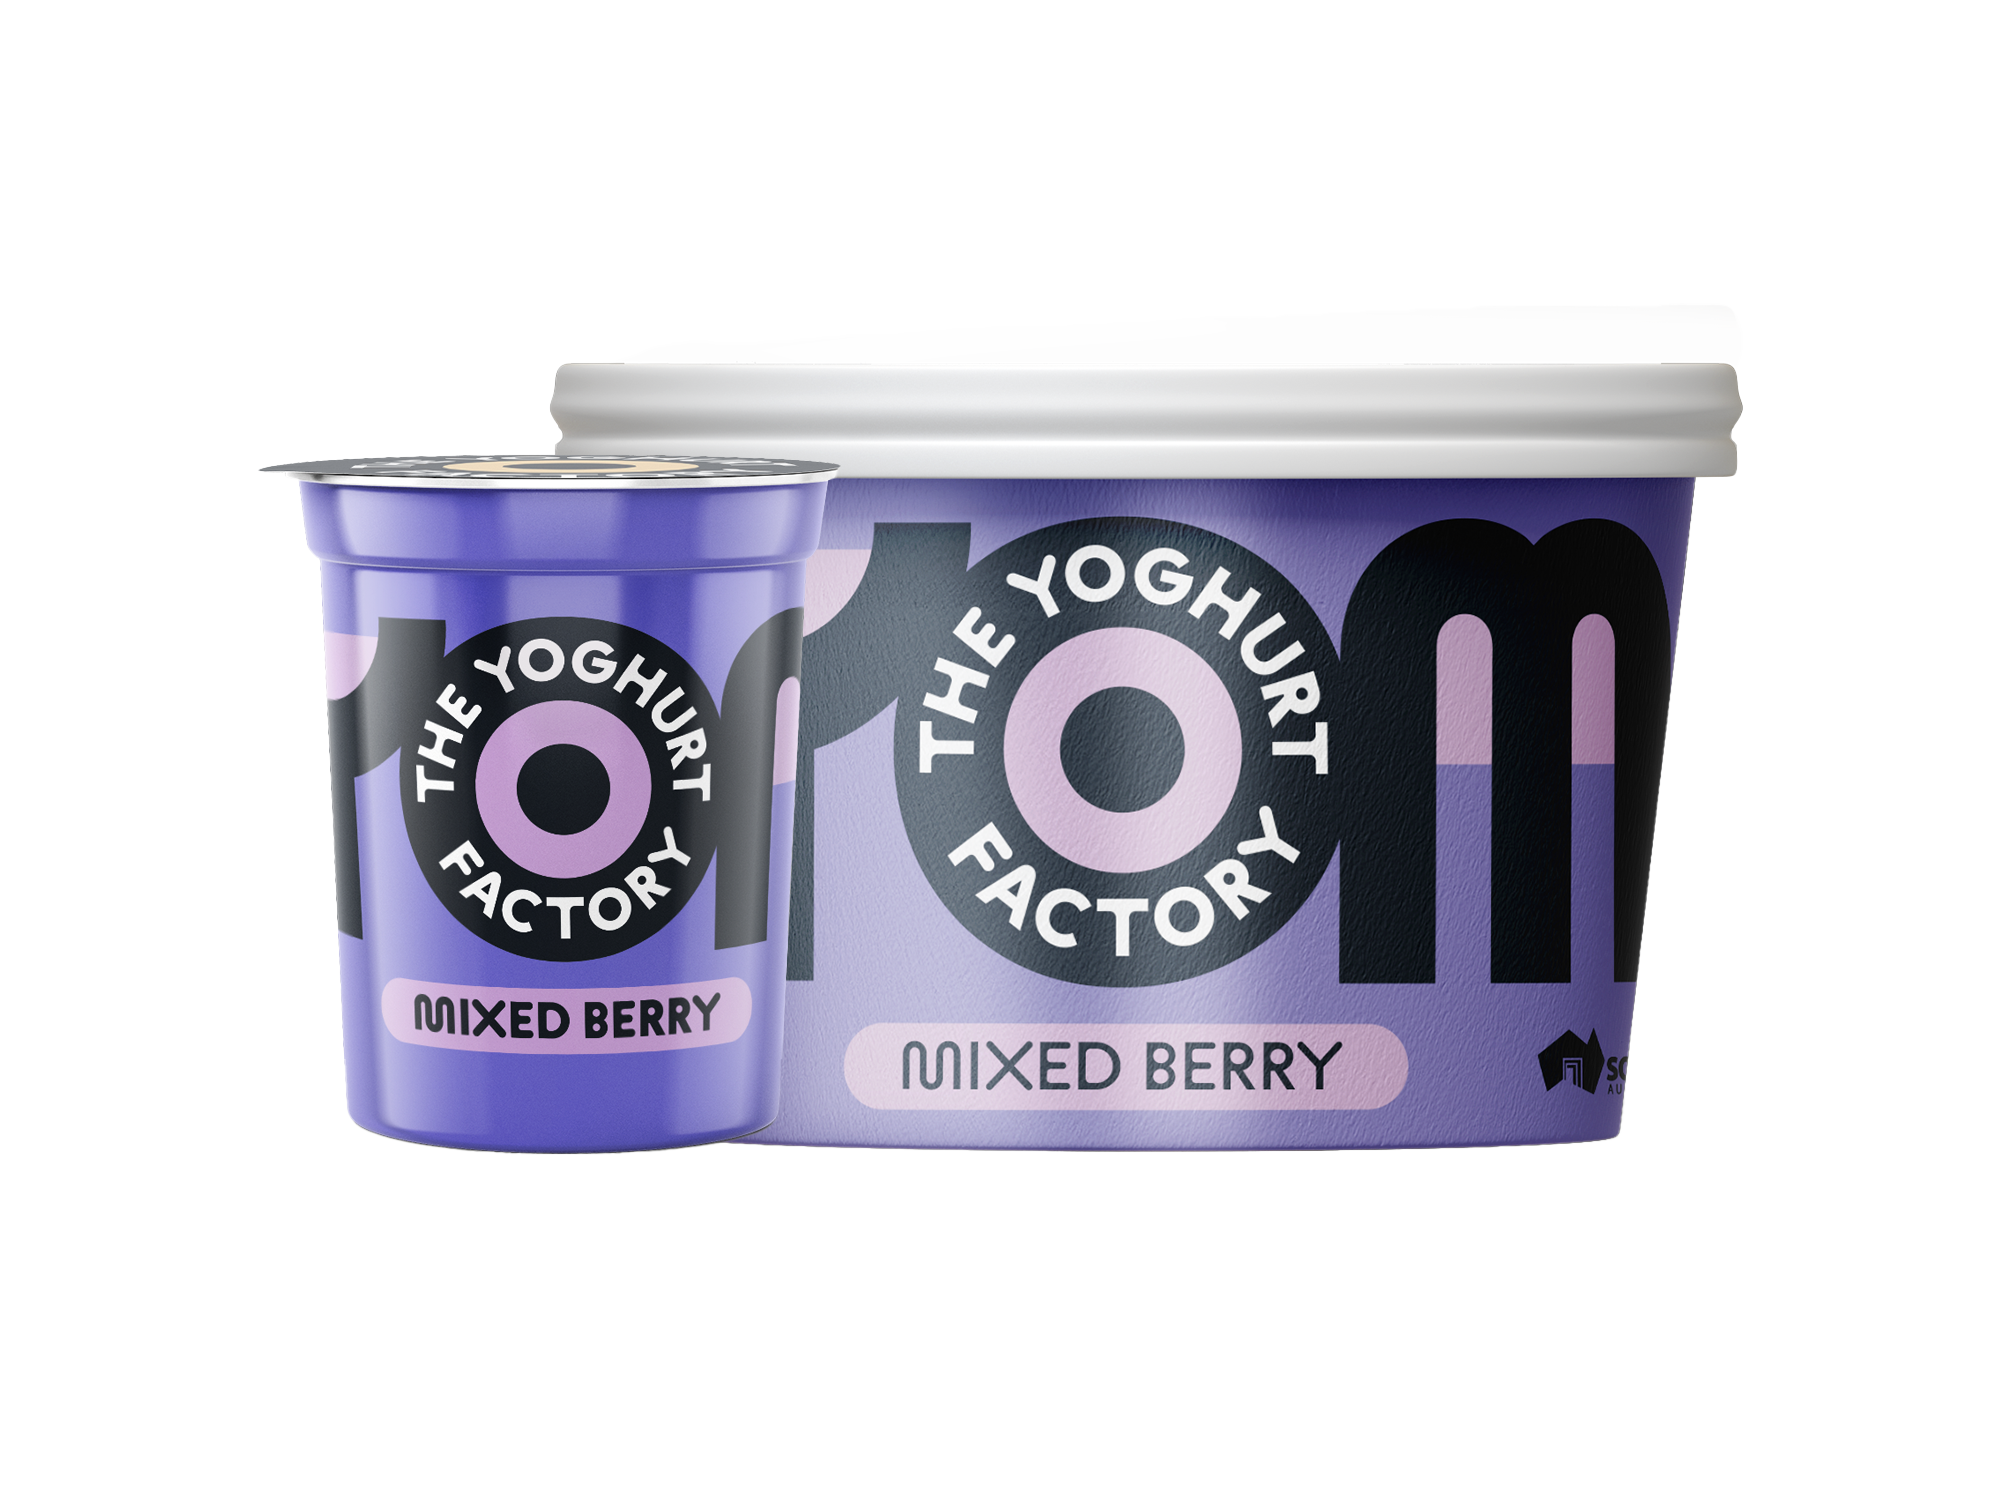 Yom Yoghurt - Mixed Berry Yoghurt